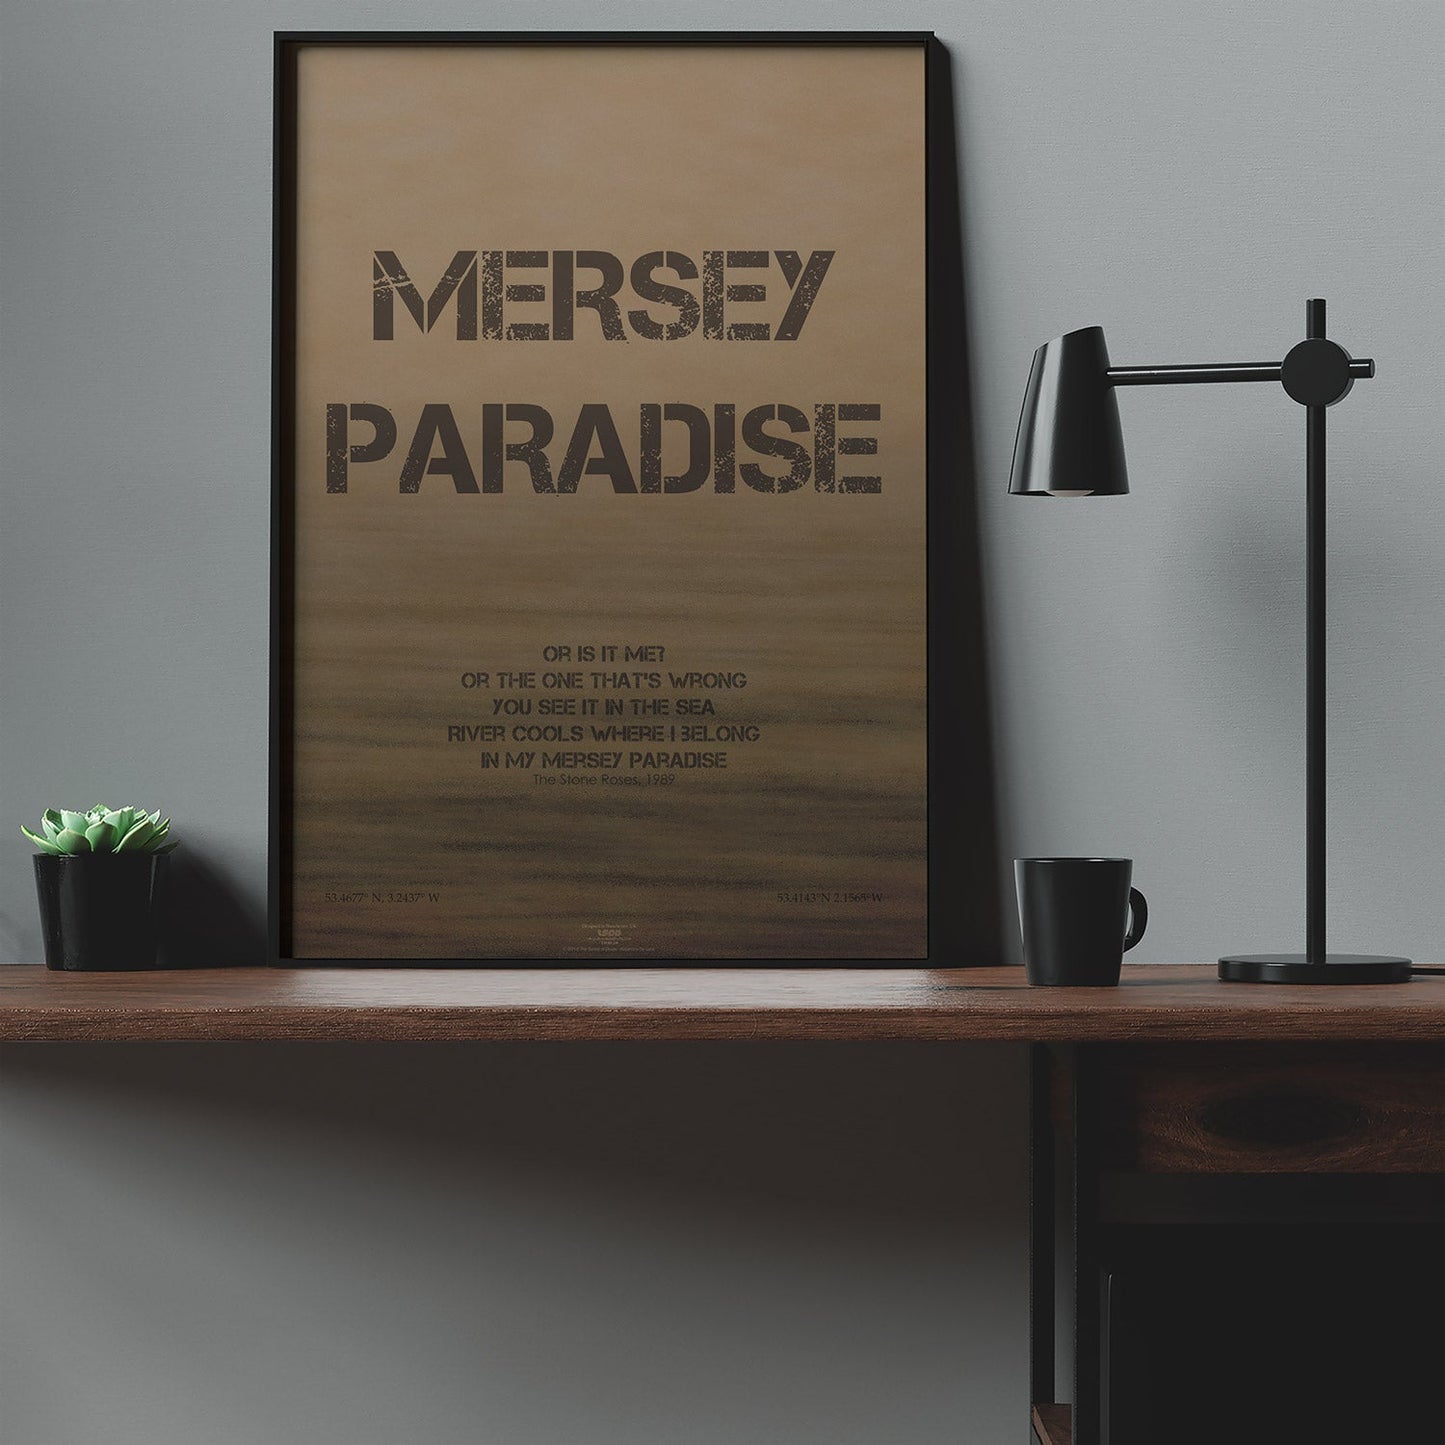 Mersey Paradise - The Sense of Doubt